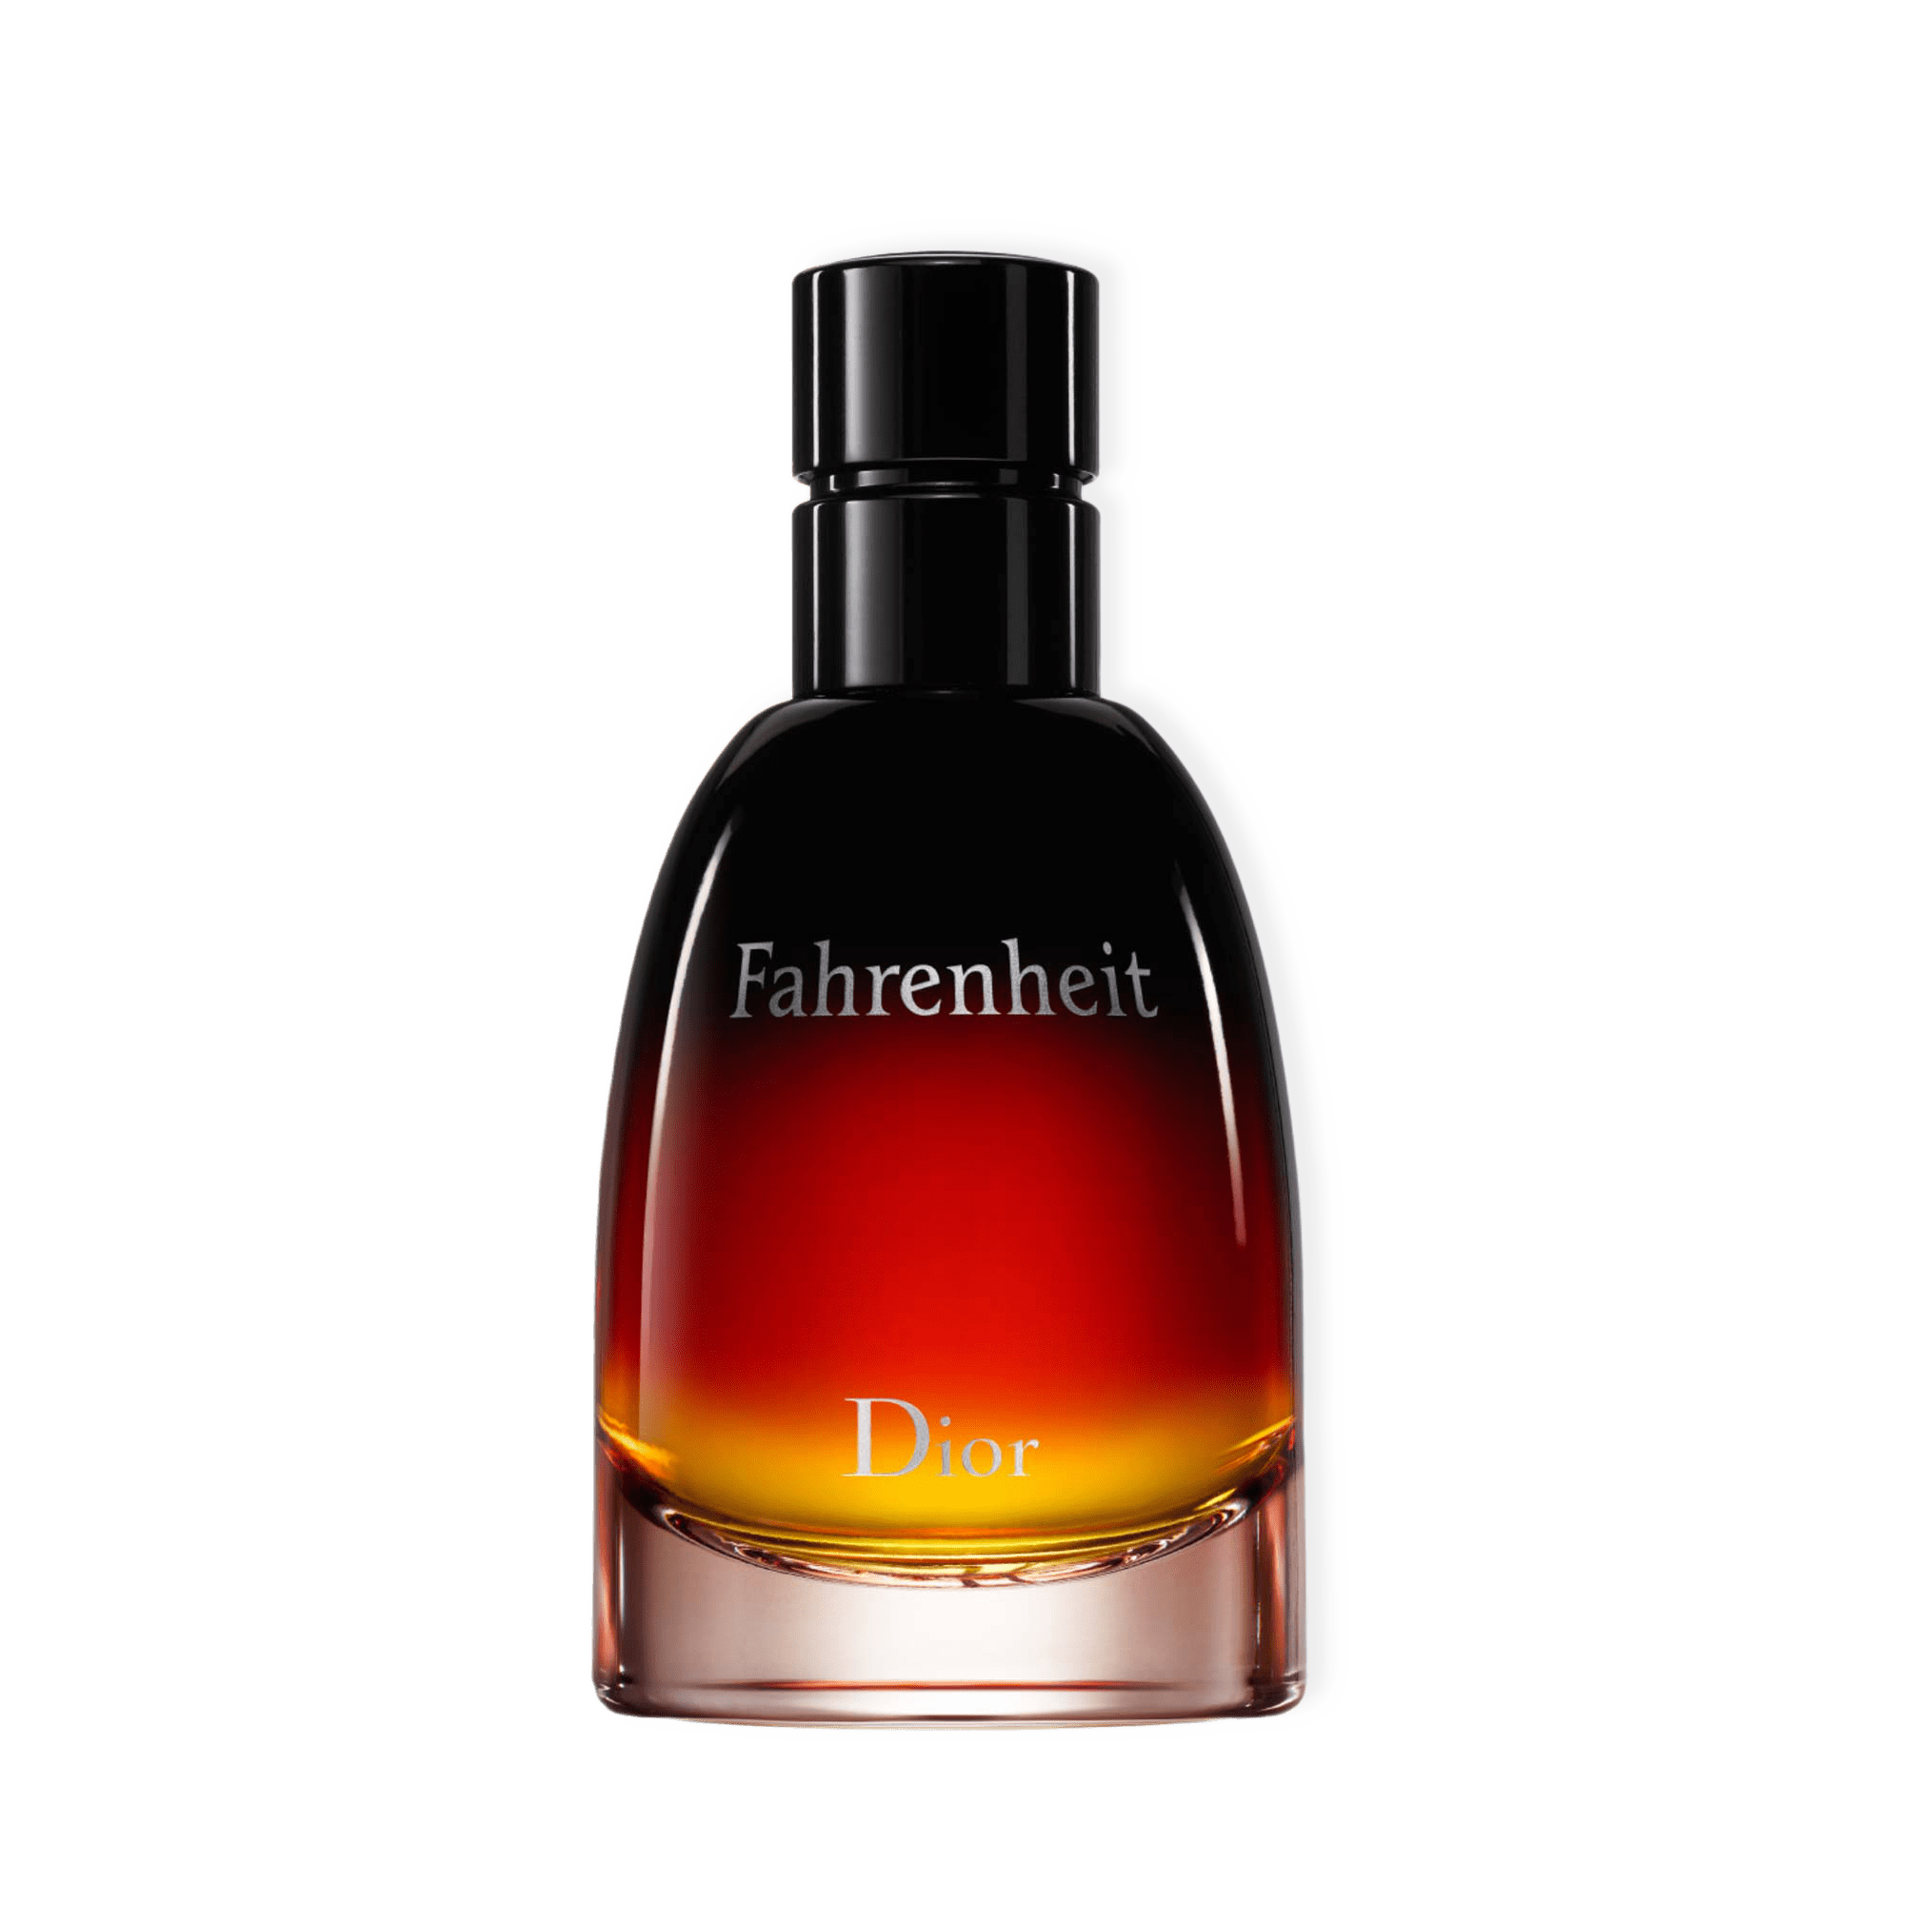 Fahrenheit Le Parfum från DIOR